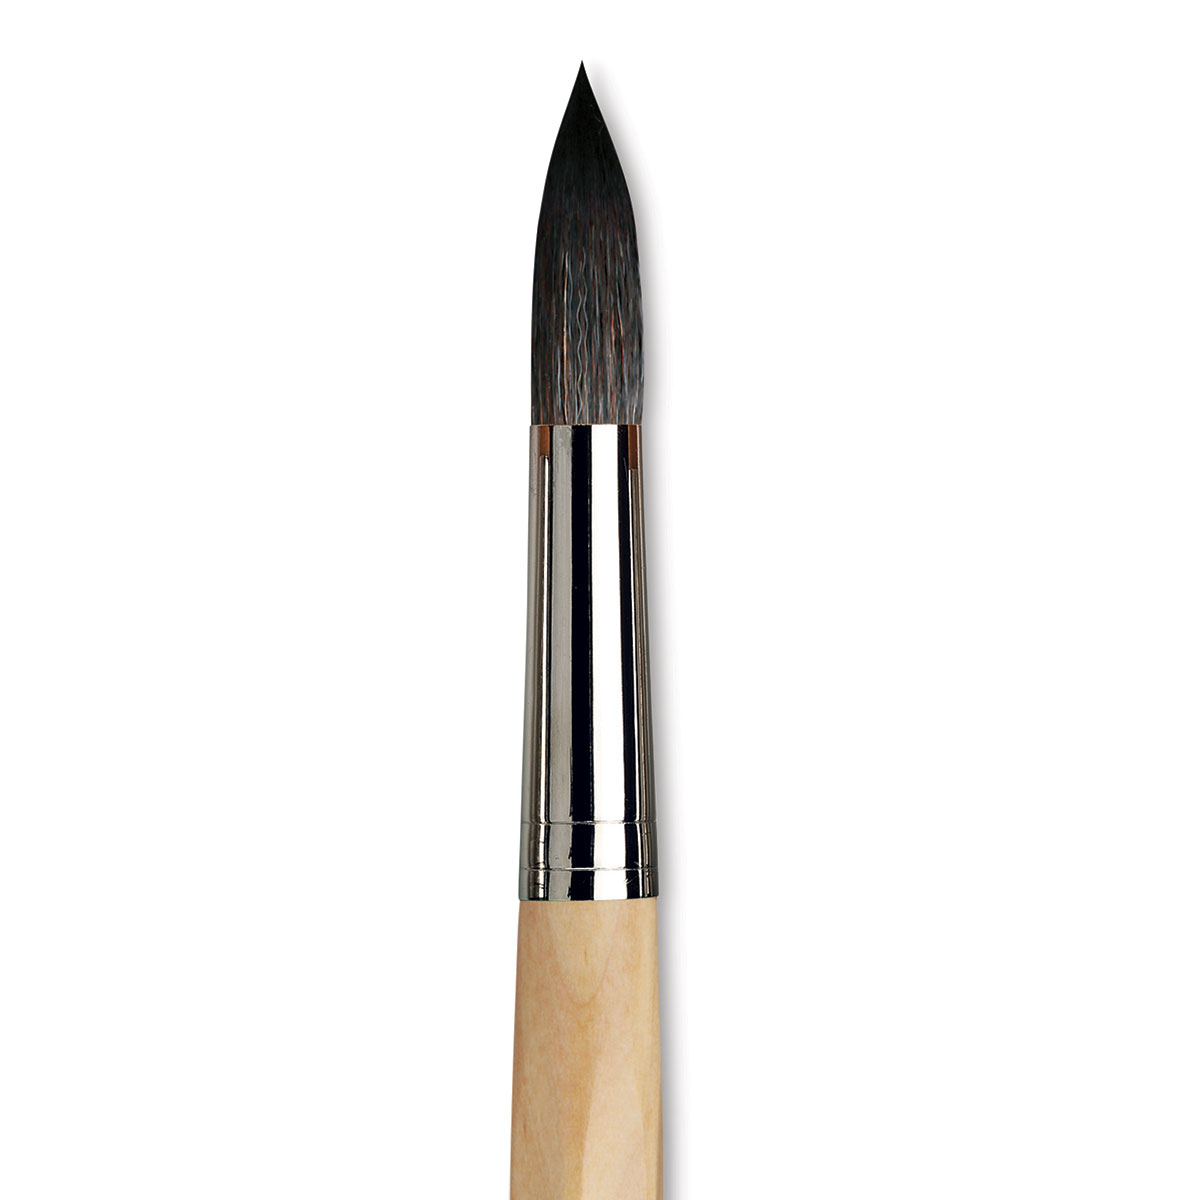 In Focus Review - da Vinci paint brushes - WarGameGuru